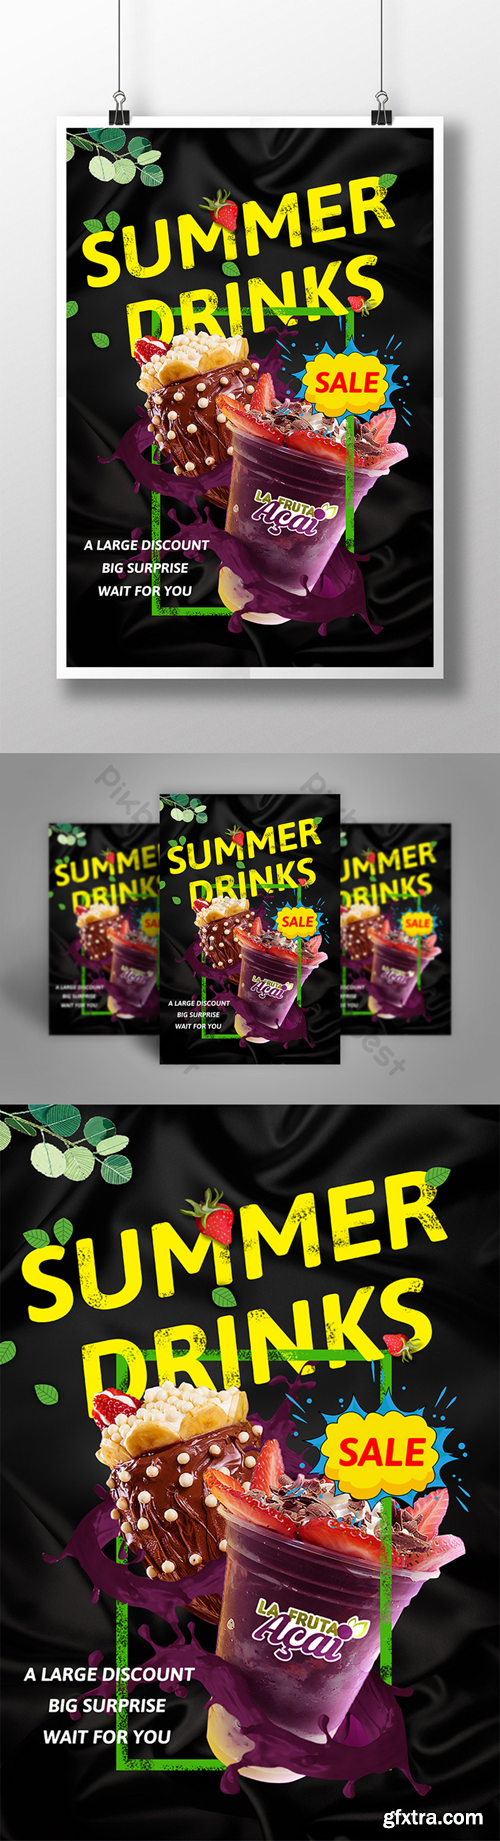 Summer drink minimalist poster Template PSD